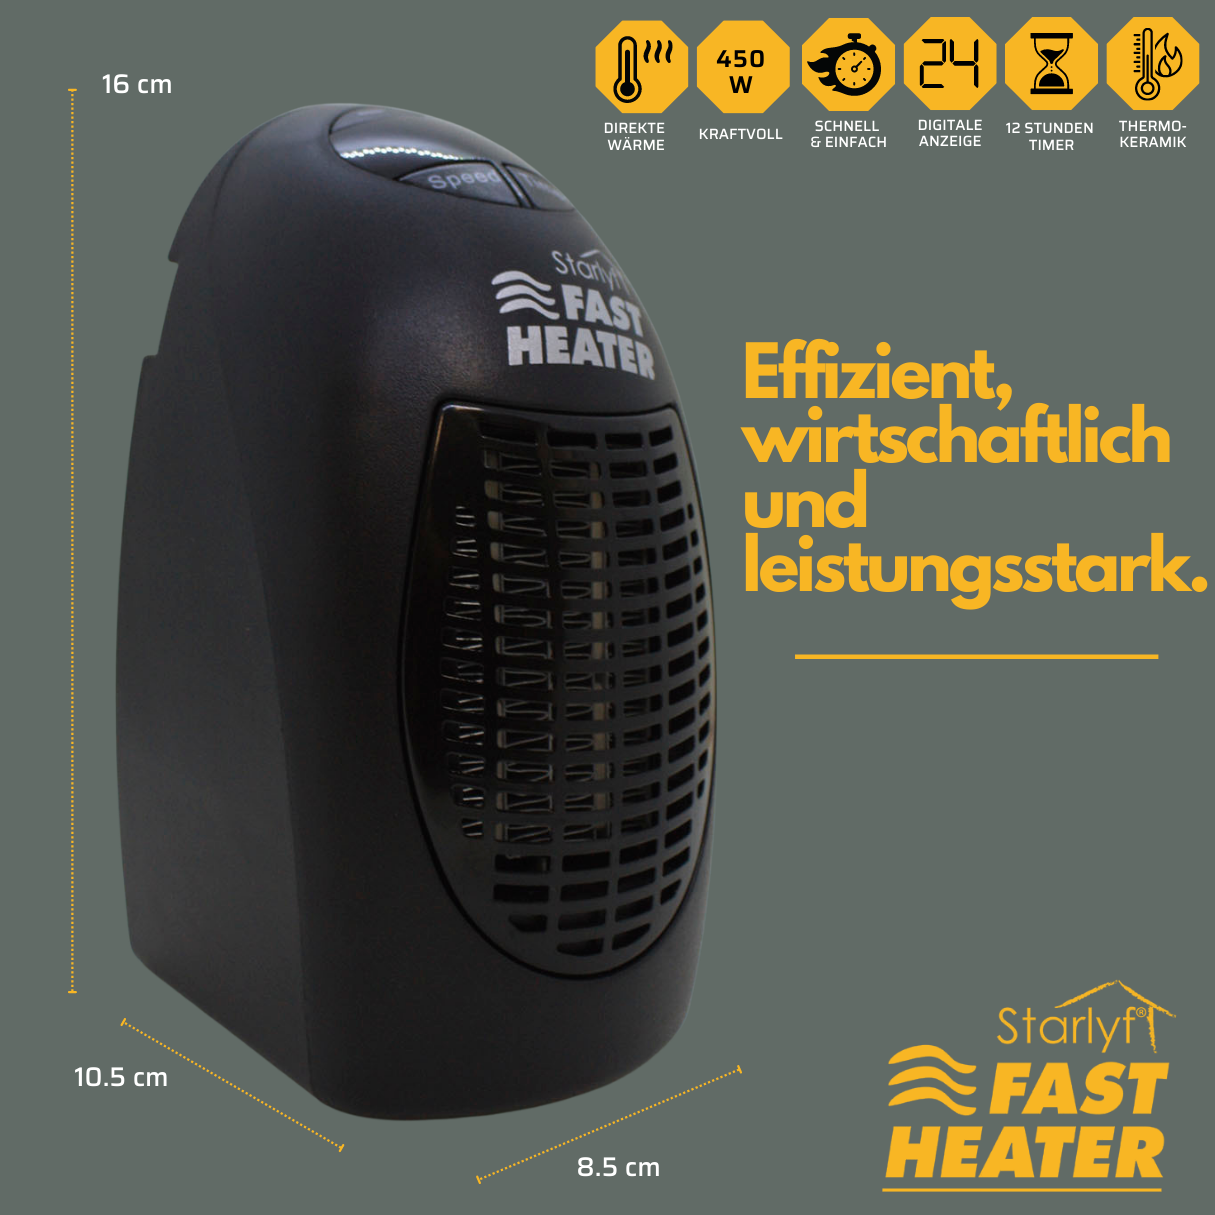 STARLYF Fast Heater Schwarz Heizlüfter 15 (400 Watt, m²) Raumgröße